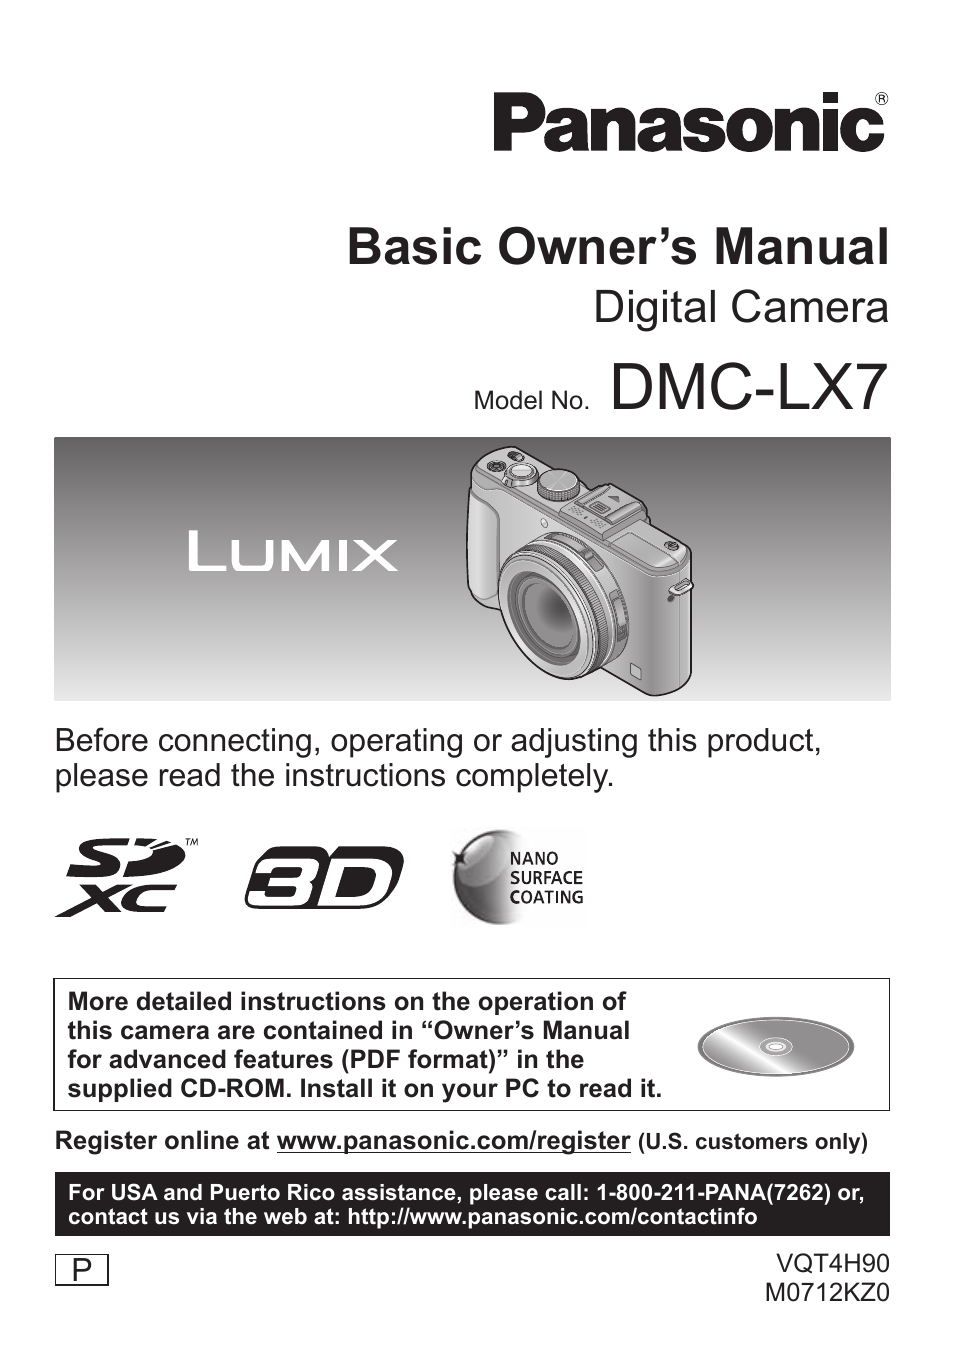 Panasonic DMC-LX7 User Manual | 36 pages | Also for: DMC-LX7K